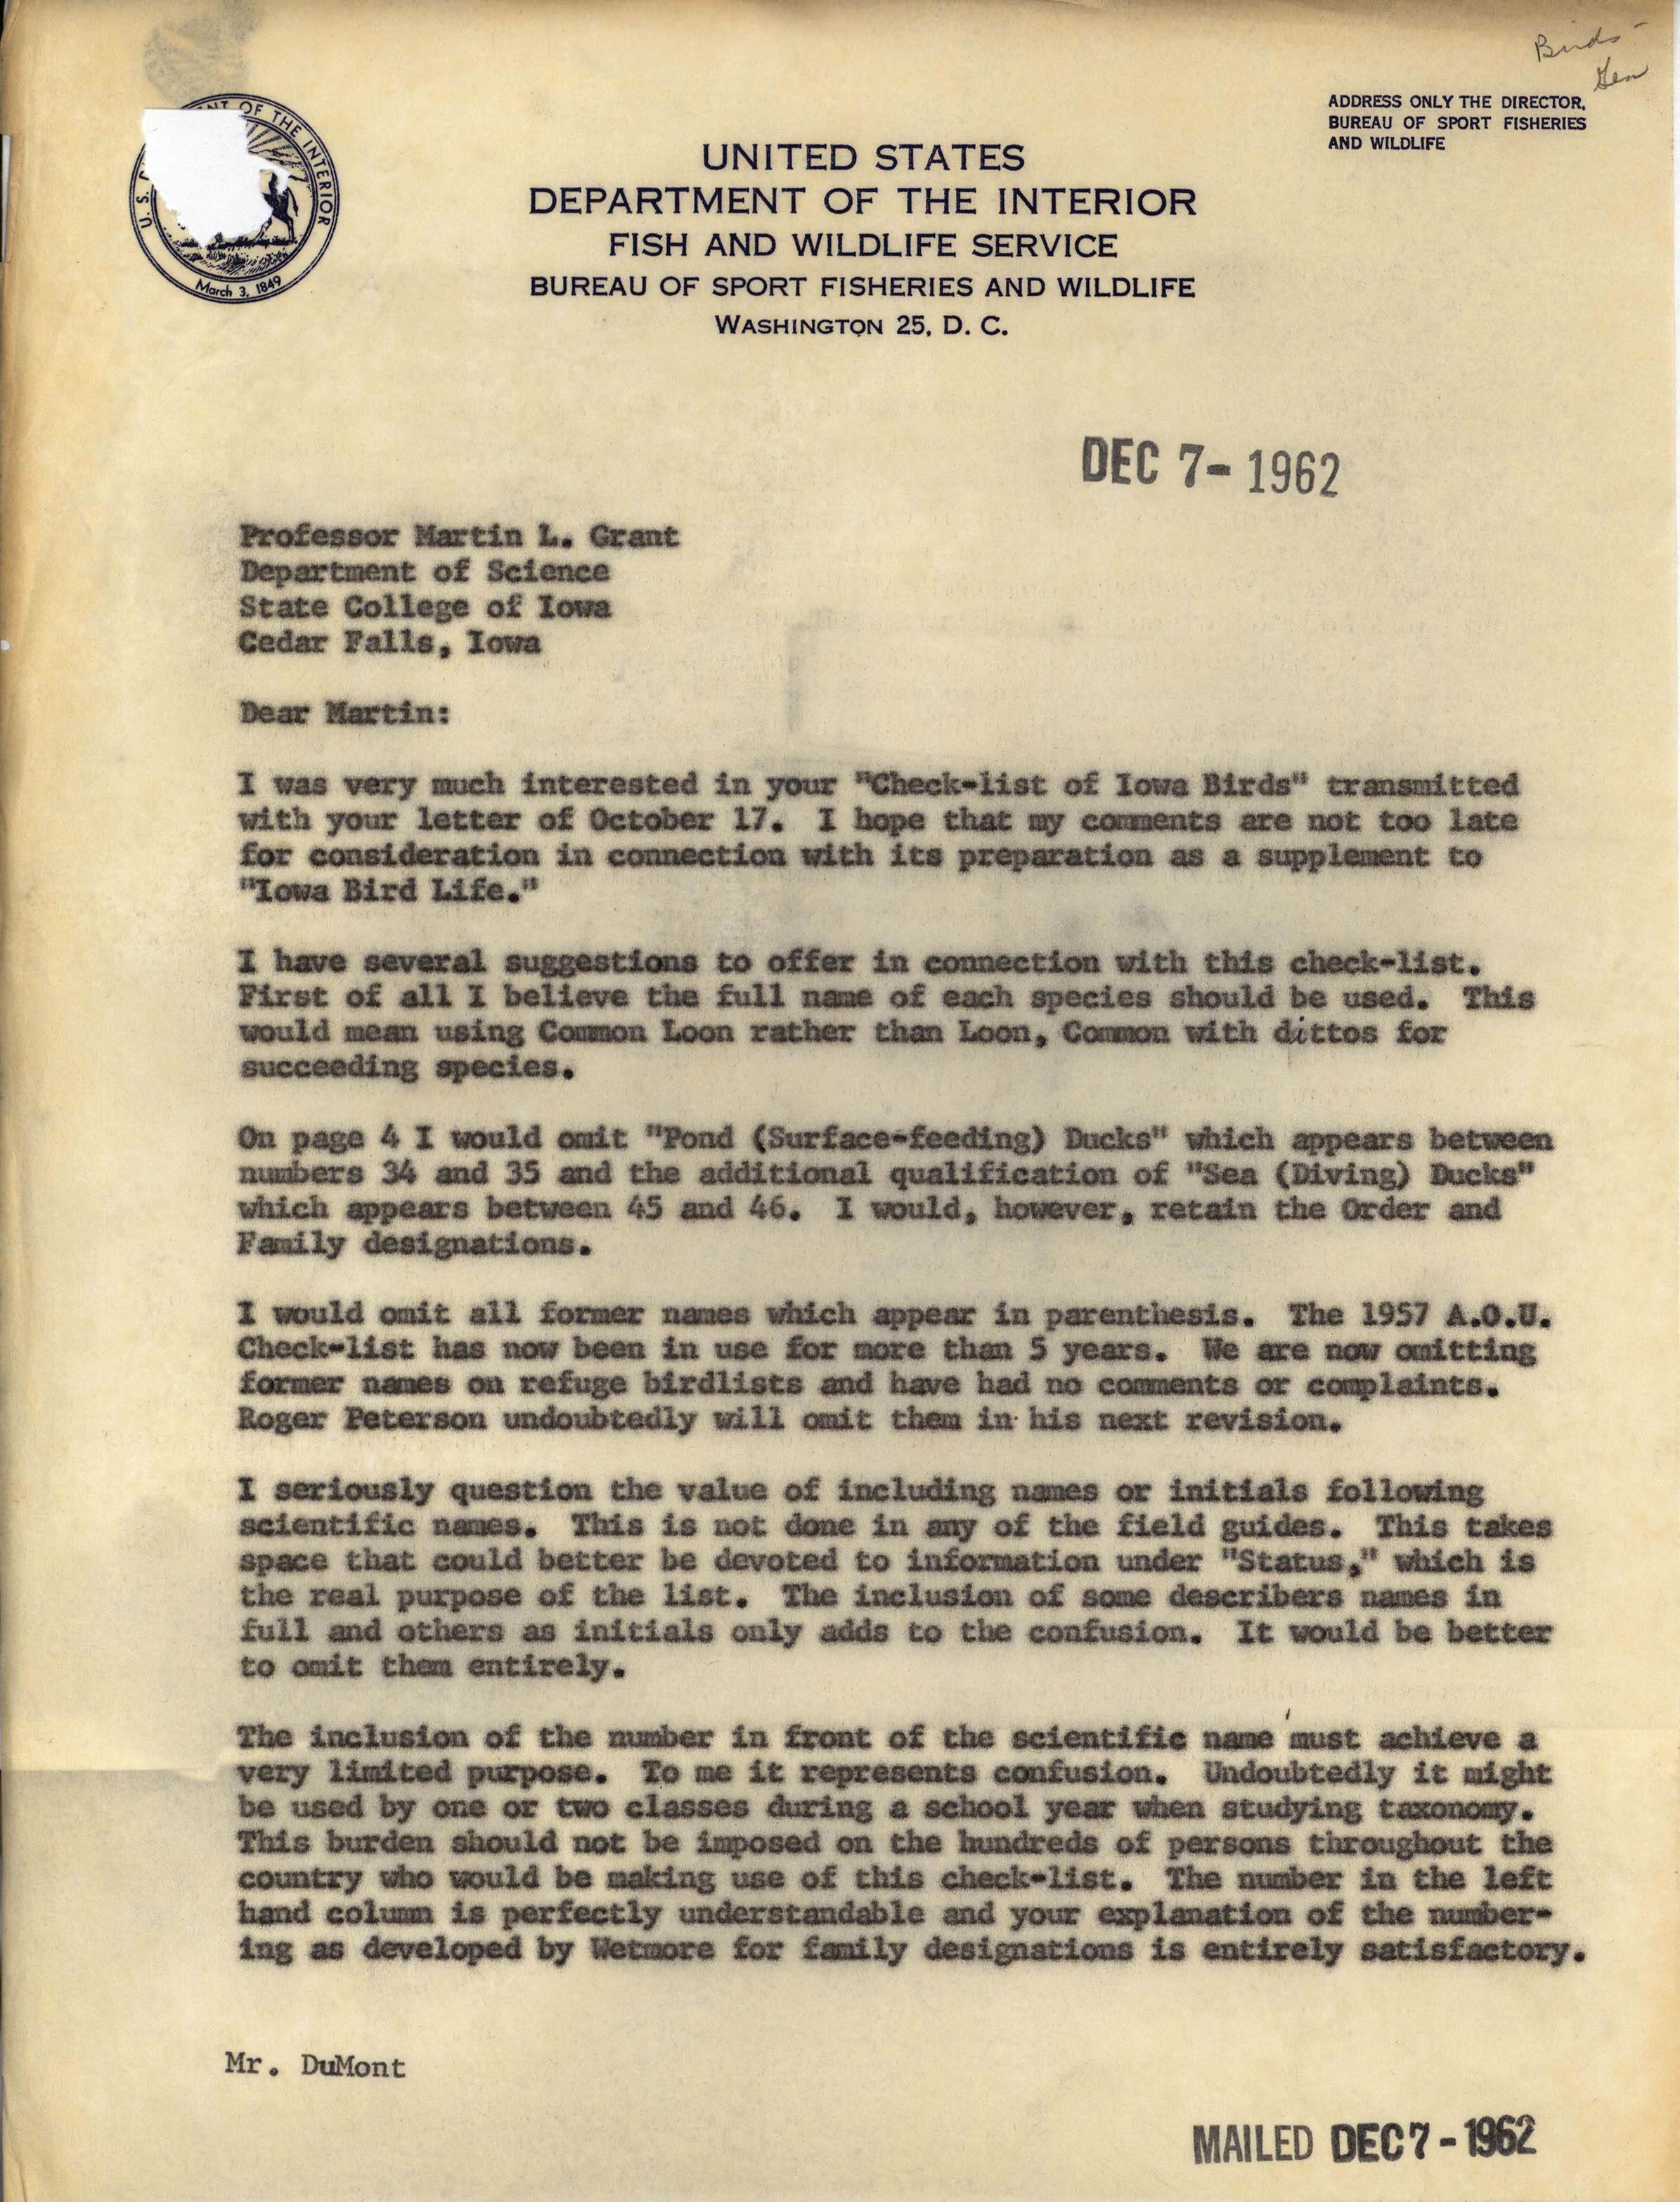 Philip DuMont letter to Martin Grant regarding the Check-list of Iowa Birds, December 7, 1962